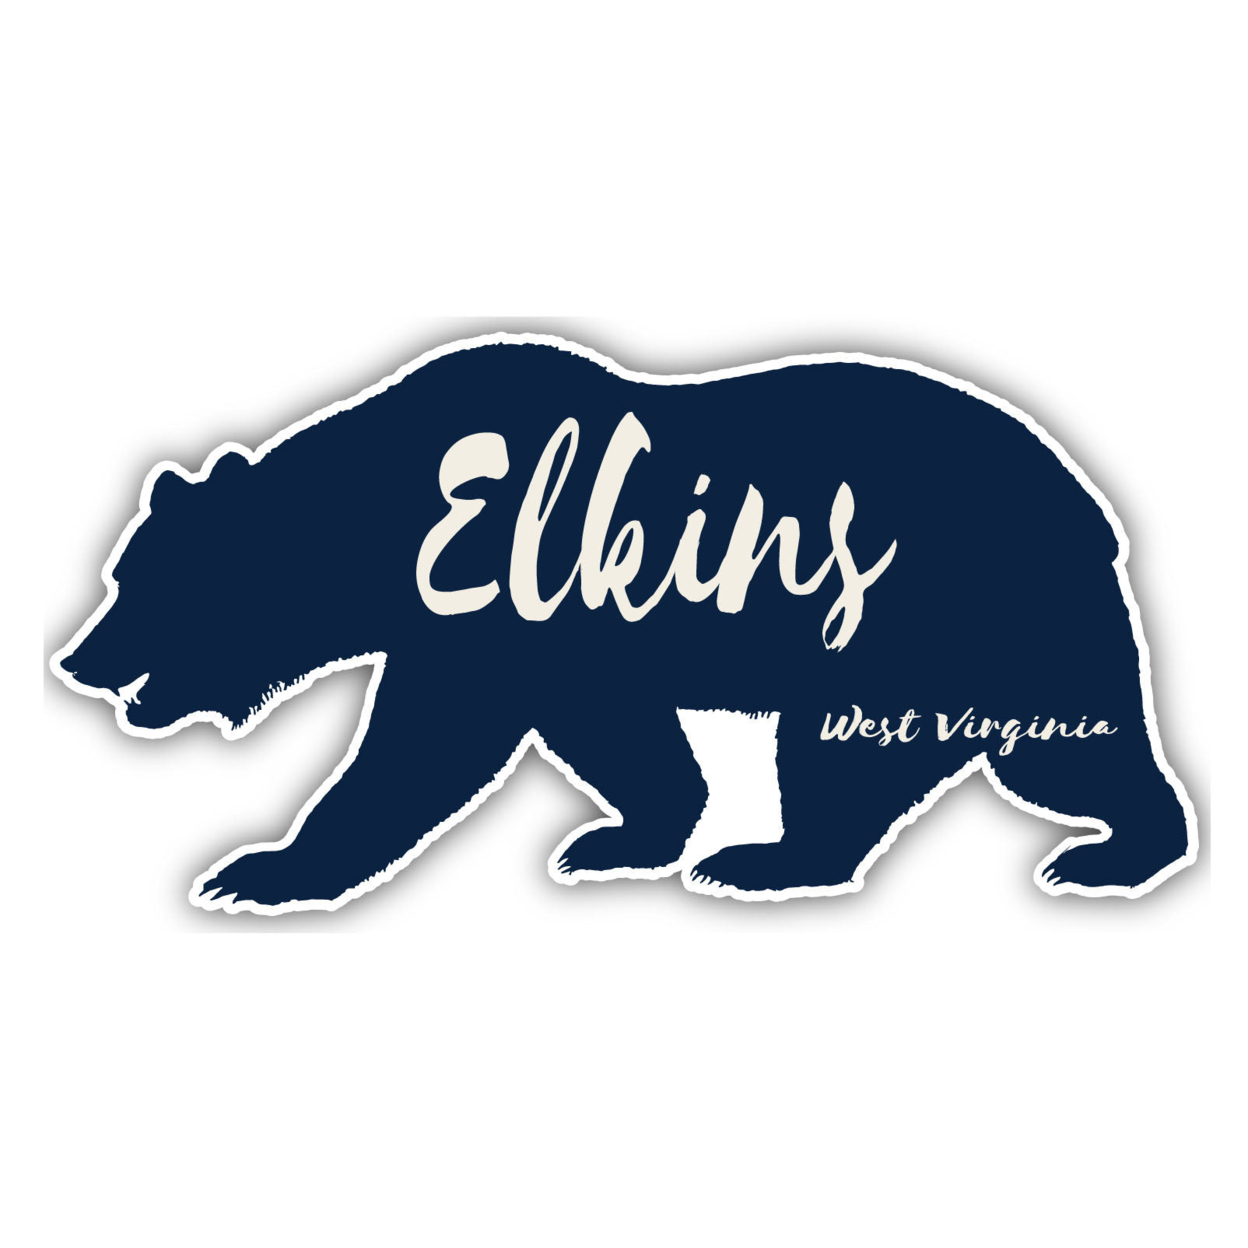 Elkins West Virginia Souvenir Decorative Stickers (Choose Theme And Size) - 4-Pack, 4-Inch, Tent